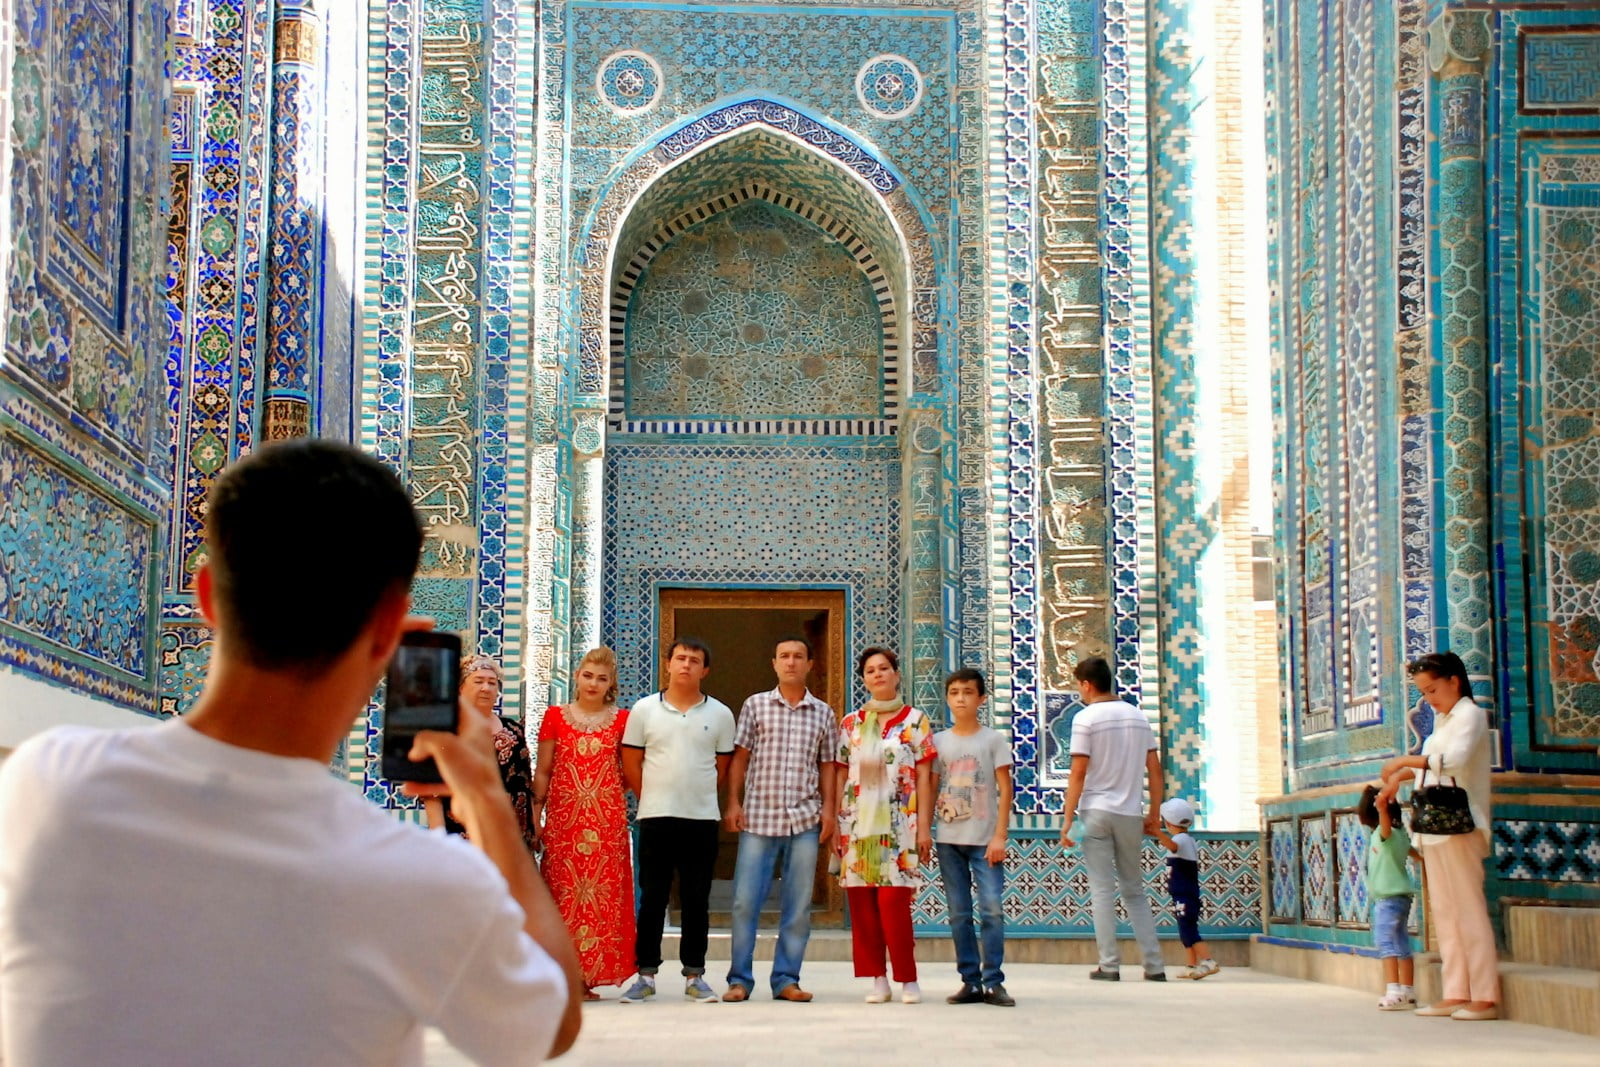 The Best Way To Plan A Trip To Uzbekistan